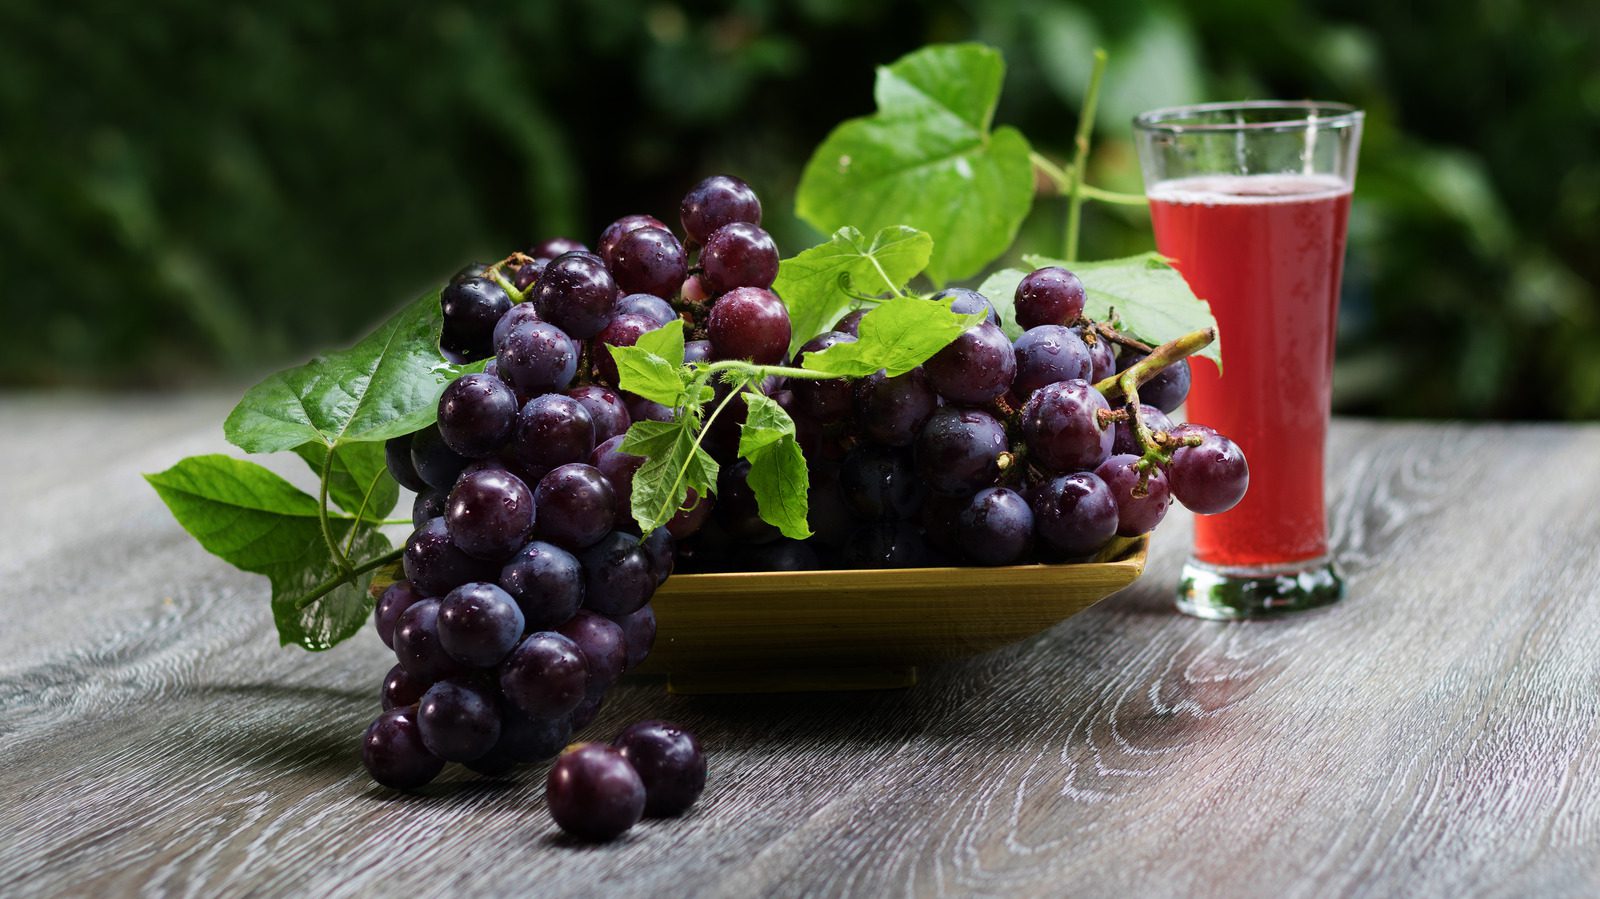 Cran-Grape Juice and its Hidden Powers